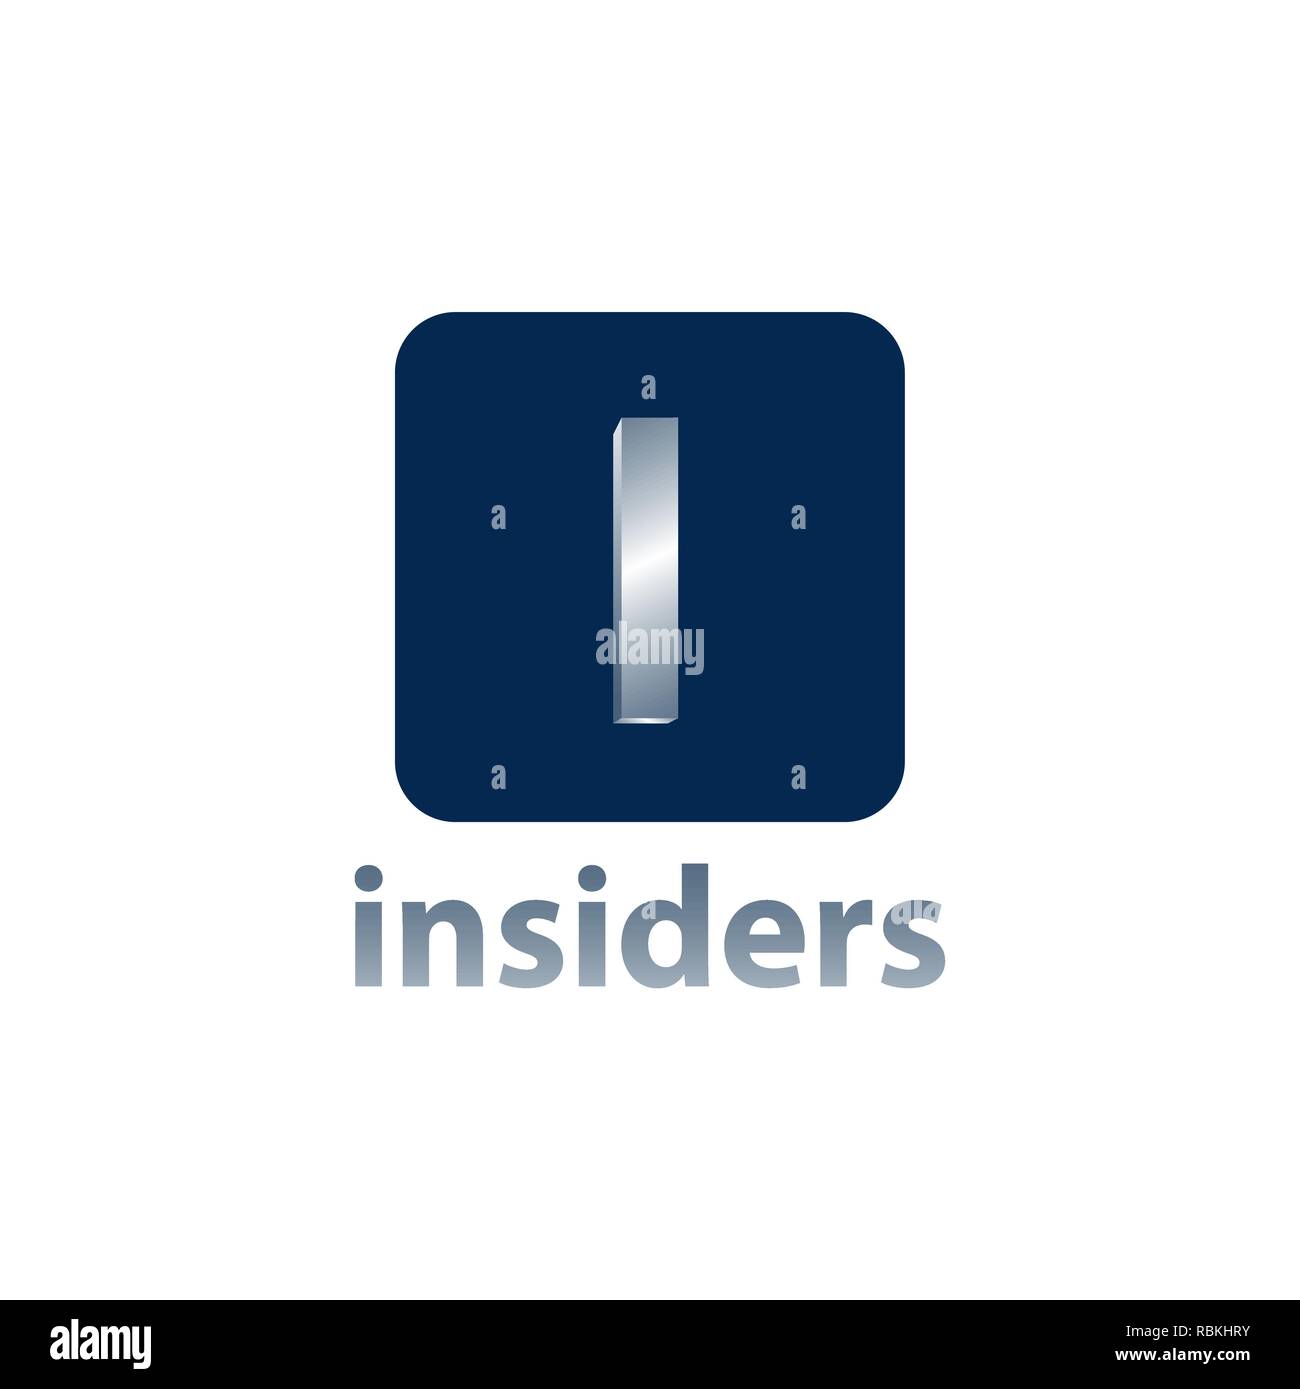 Insider. Platz Anfangsbuchstabe i logo Konzept Design vorlage Idee Stock Vektor